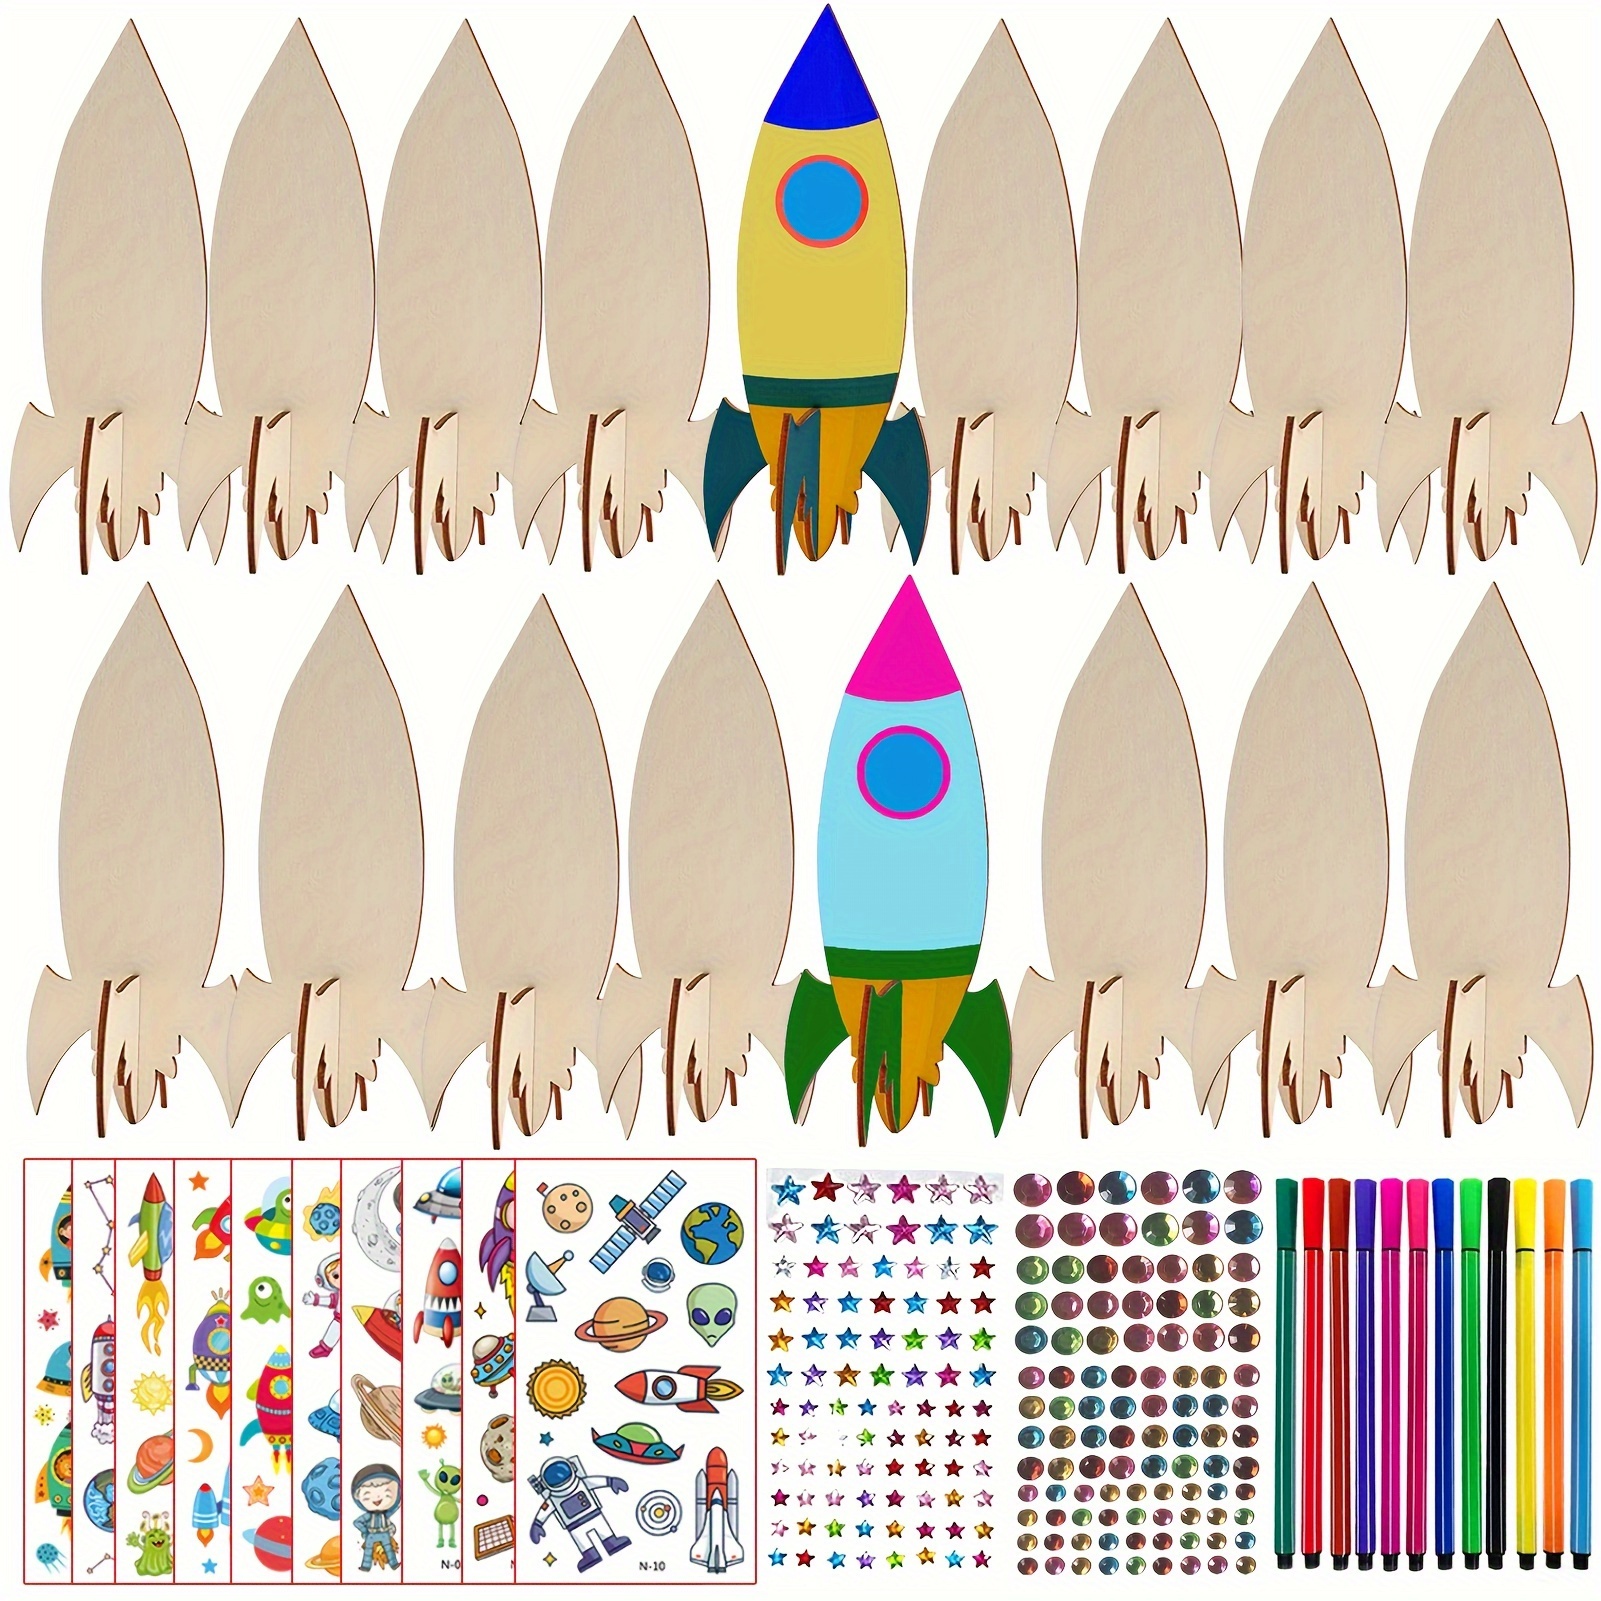 

231pcs Rocket Wood Crafts Set, Rocket Toys, Birthday Crafts, Including 15pcs Rocket Wood, 202pcs Rhinestones, 12 Colored Pencils, 2 Stickers, Diy Crafts